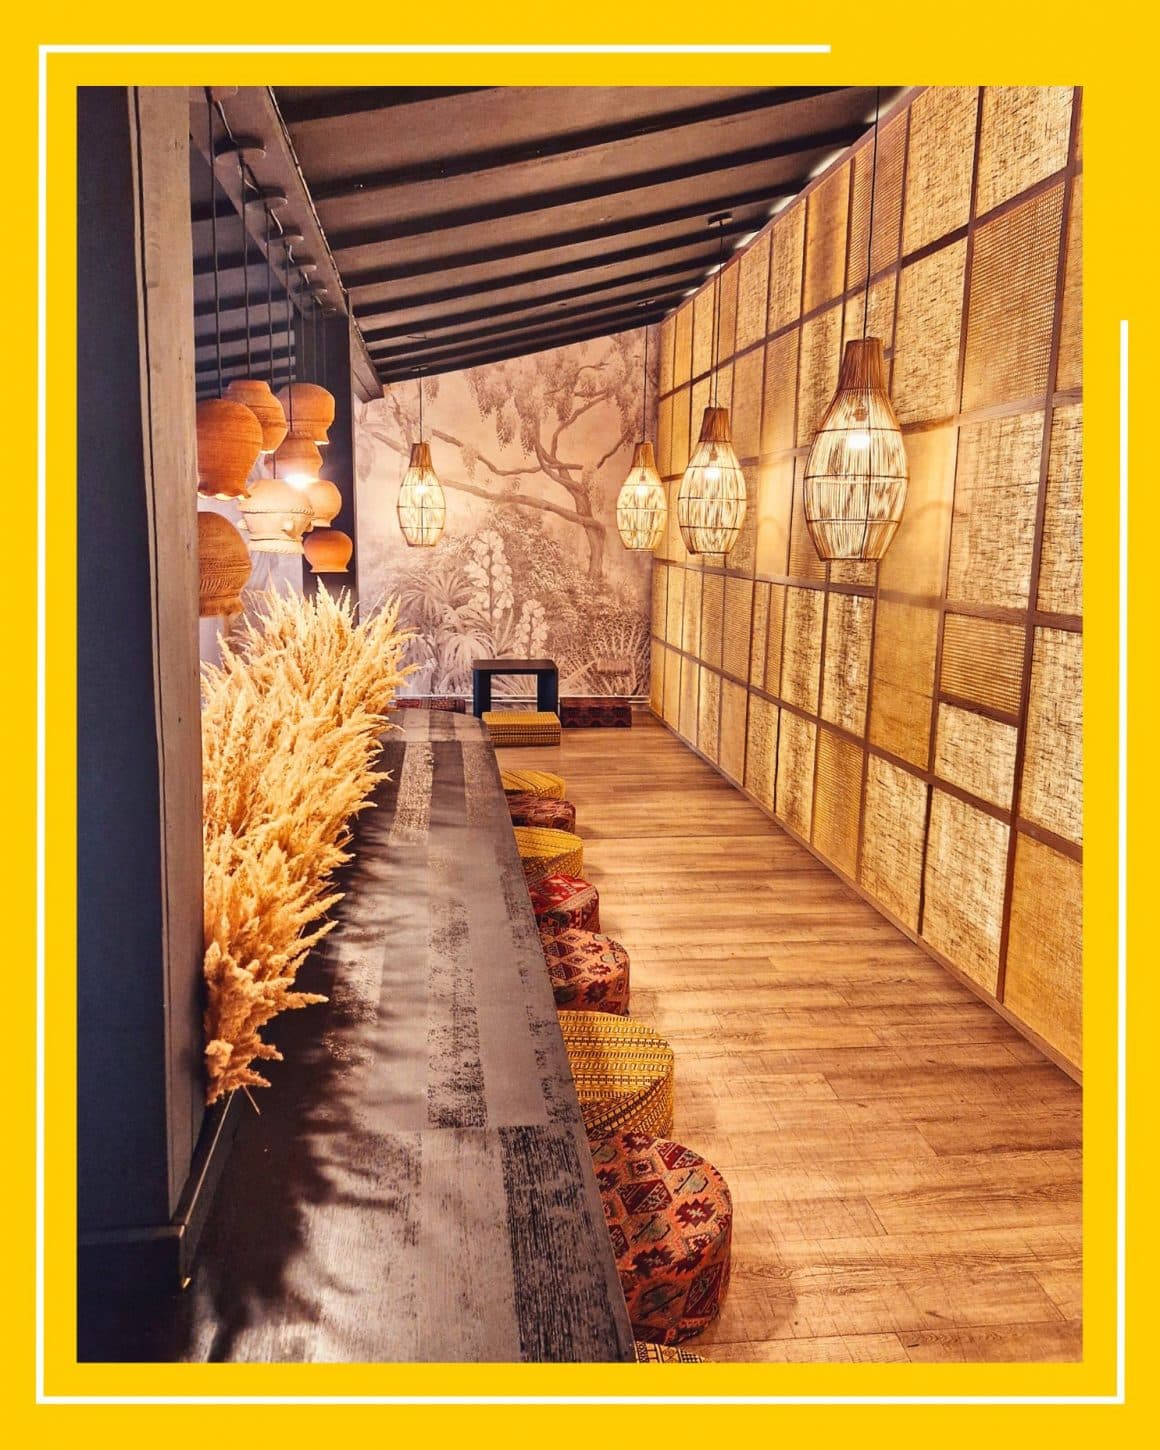 Interiorul decorat in stil asiatic, elegant, de la restaurant Momo, cu o masa joasa si tabureti pe car ese sta pe podea, multe paie decorative, candelabre din bambus si un perete cu panouri luminate